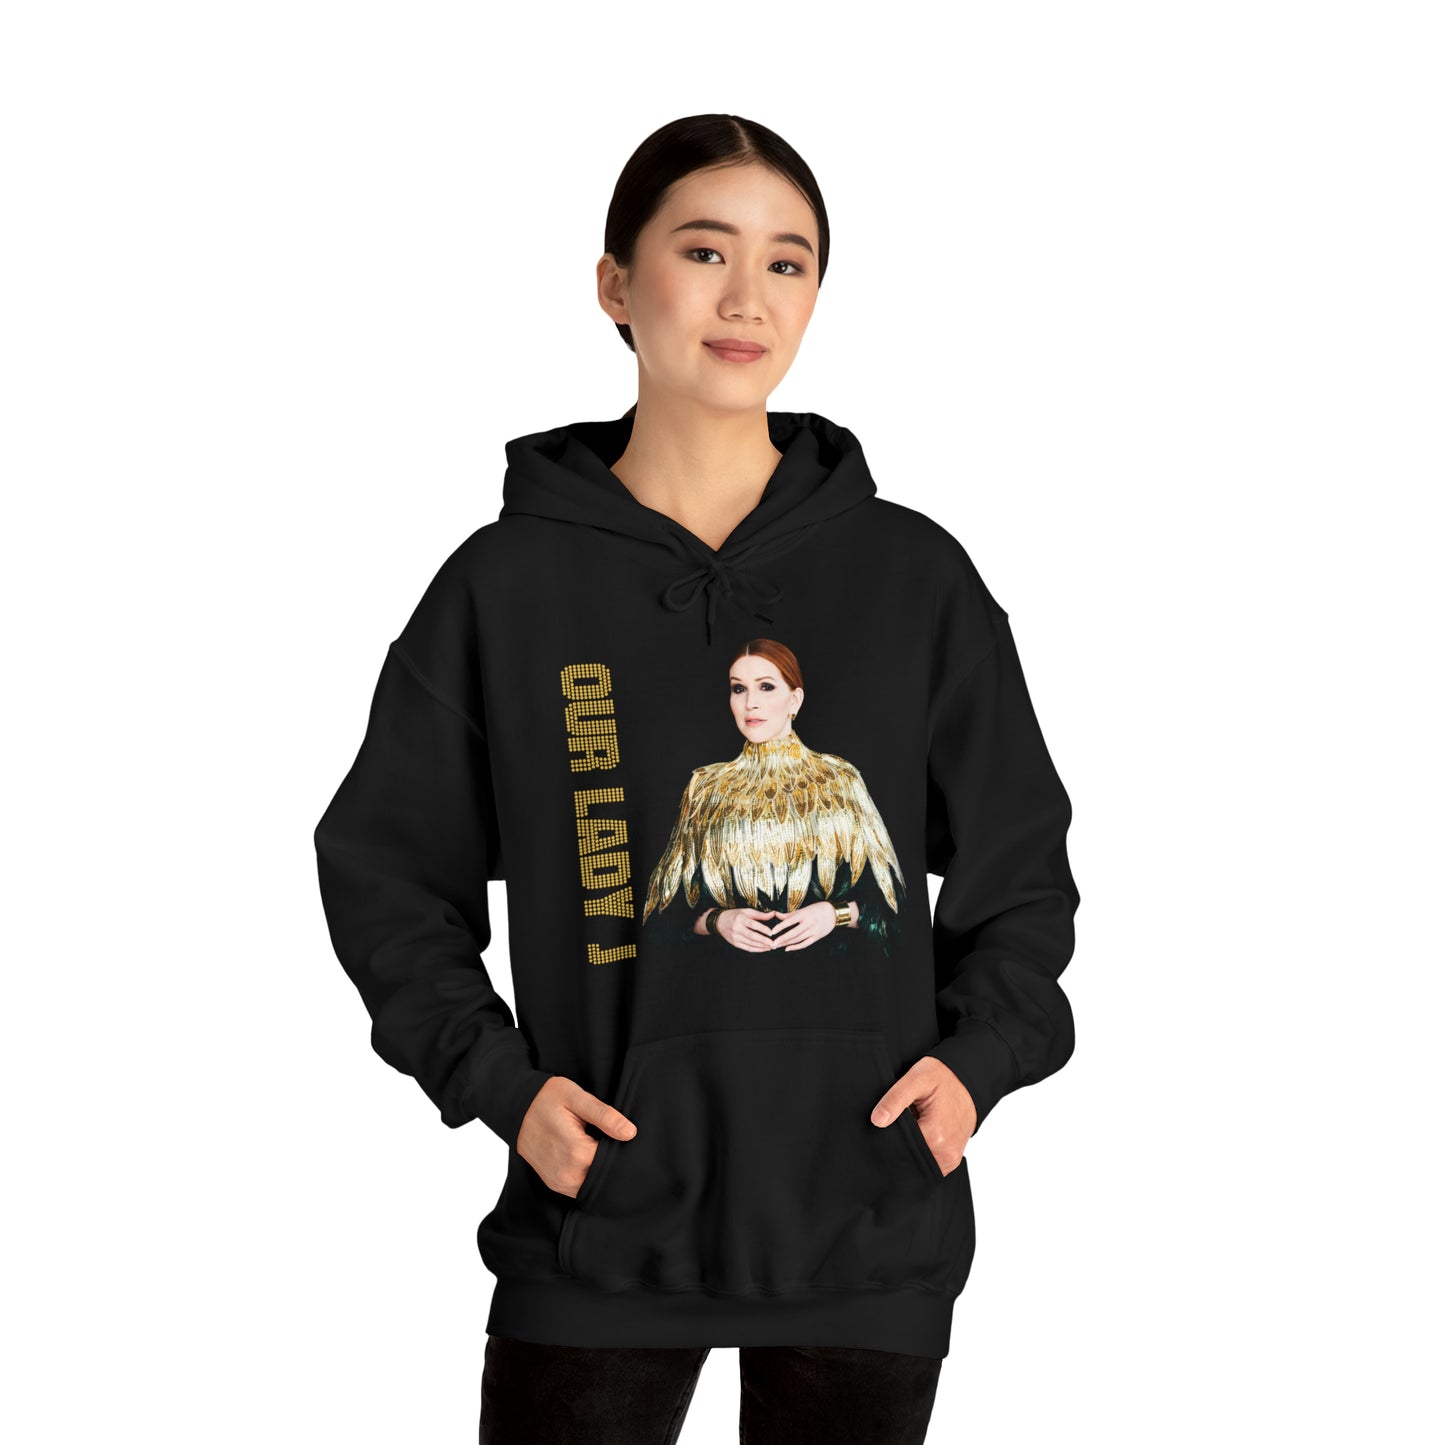 Our Lady J "Golden Wing" Heavy Blend™ Hooded Sweatshirt